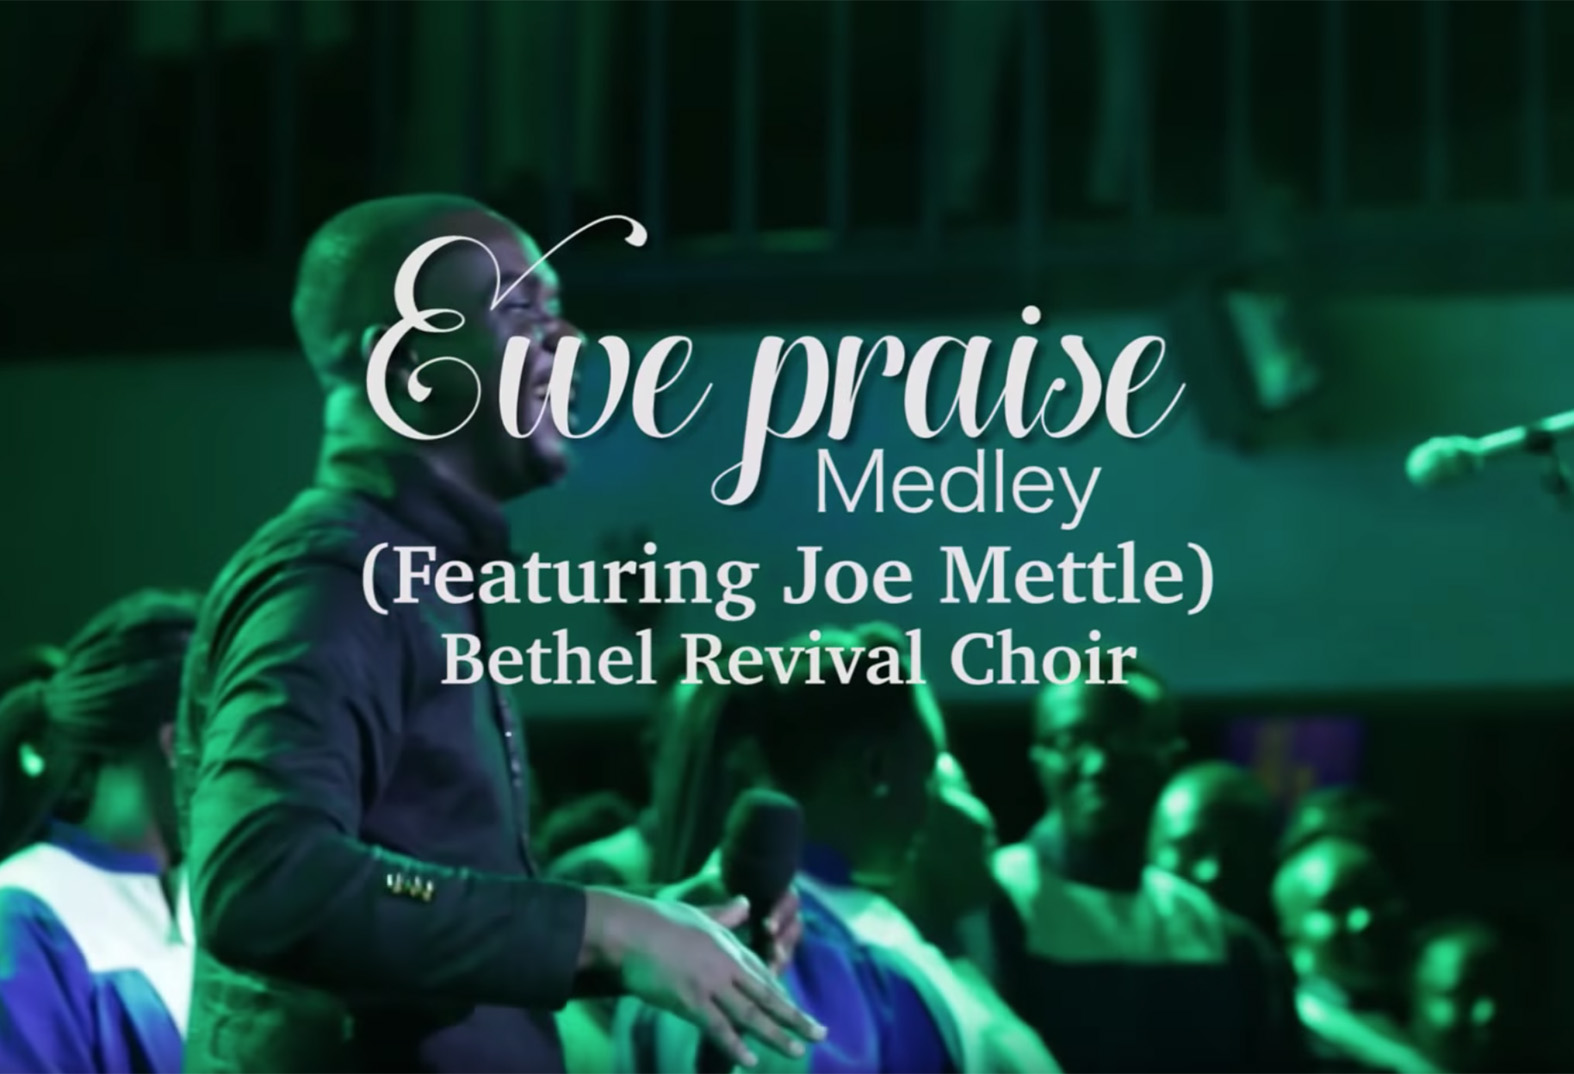 Vovome (Ewe Praise Medley) by Joe Mettle feat. Bethel Revival Choir